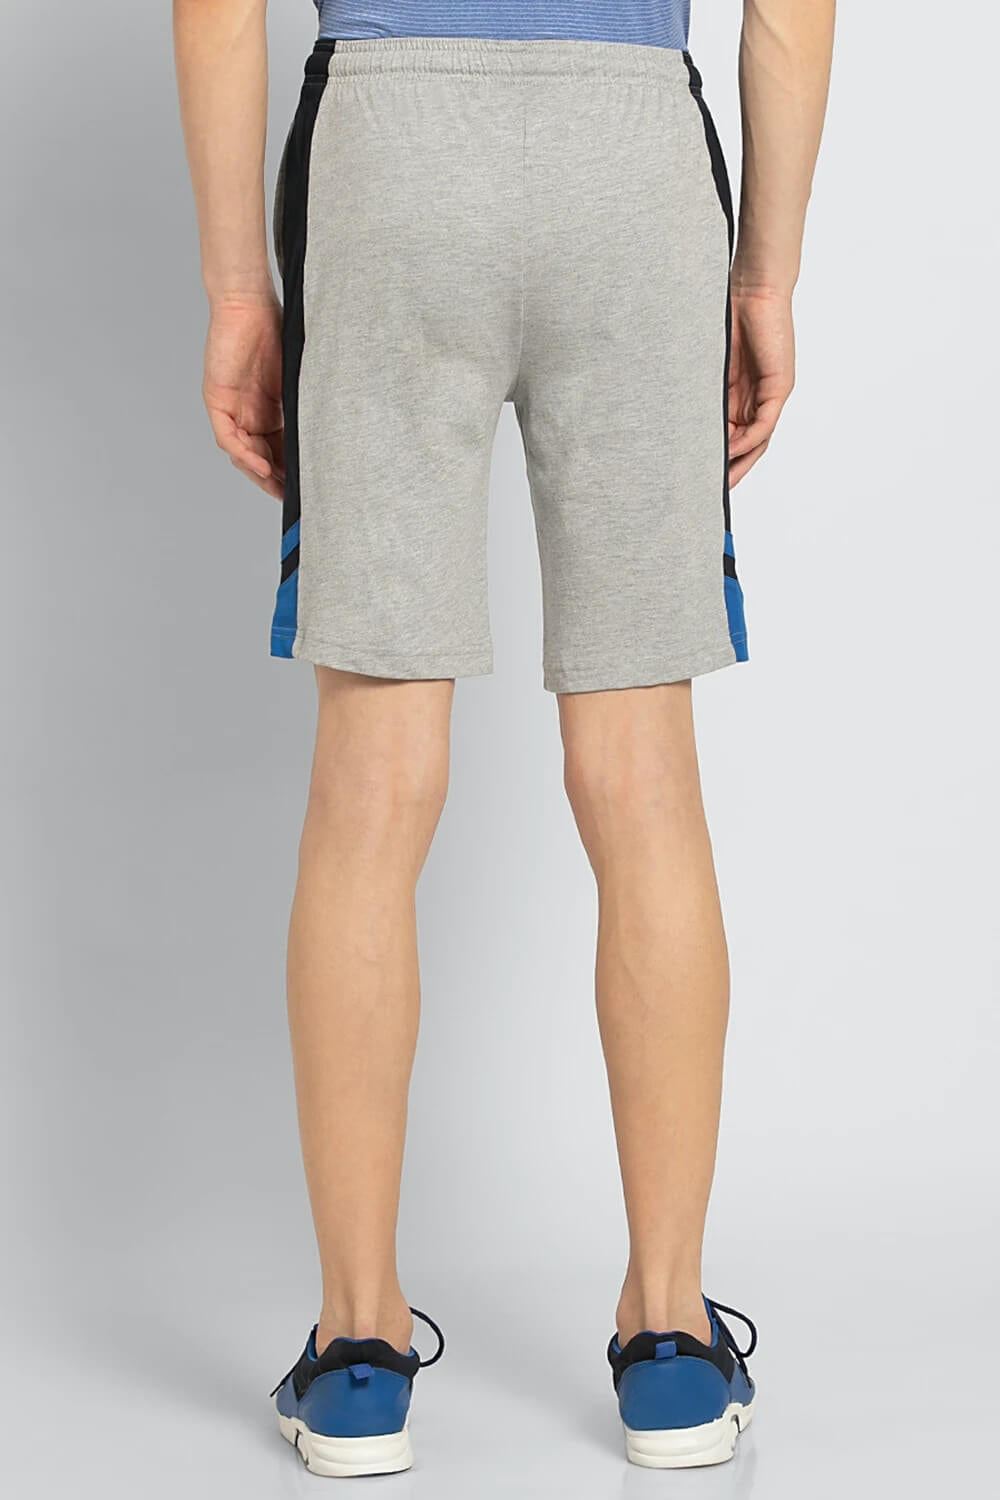 Van Heusen Grey Knit Shorts for Men #50006